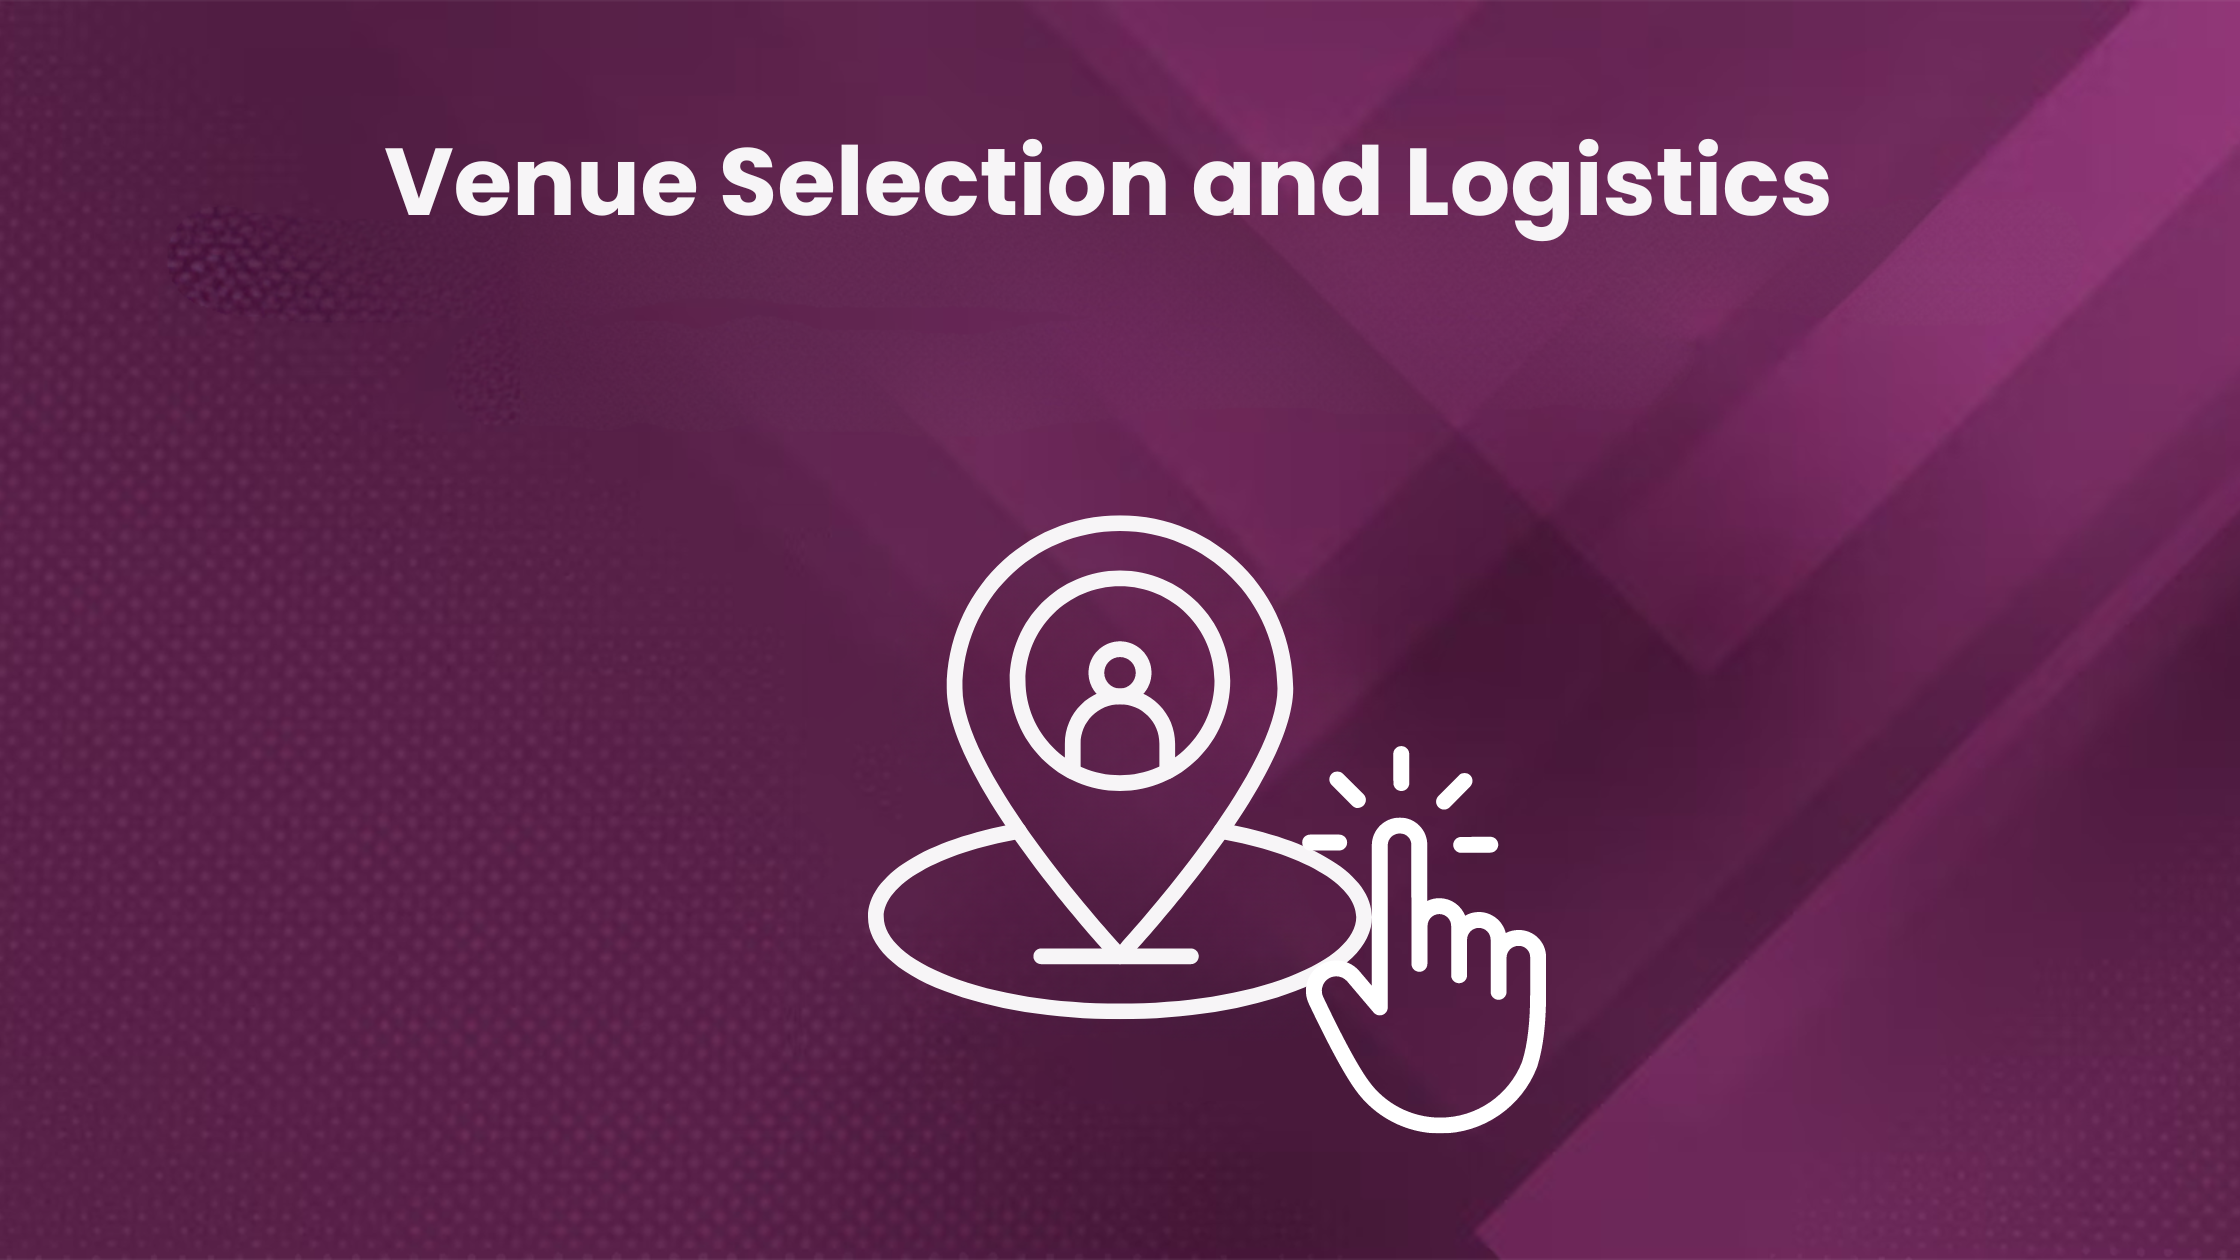 Venue selection and logistics